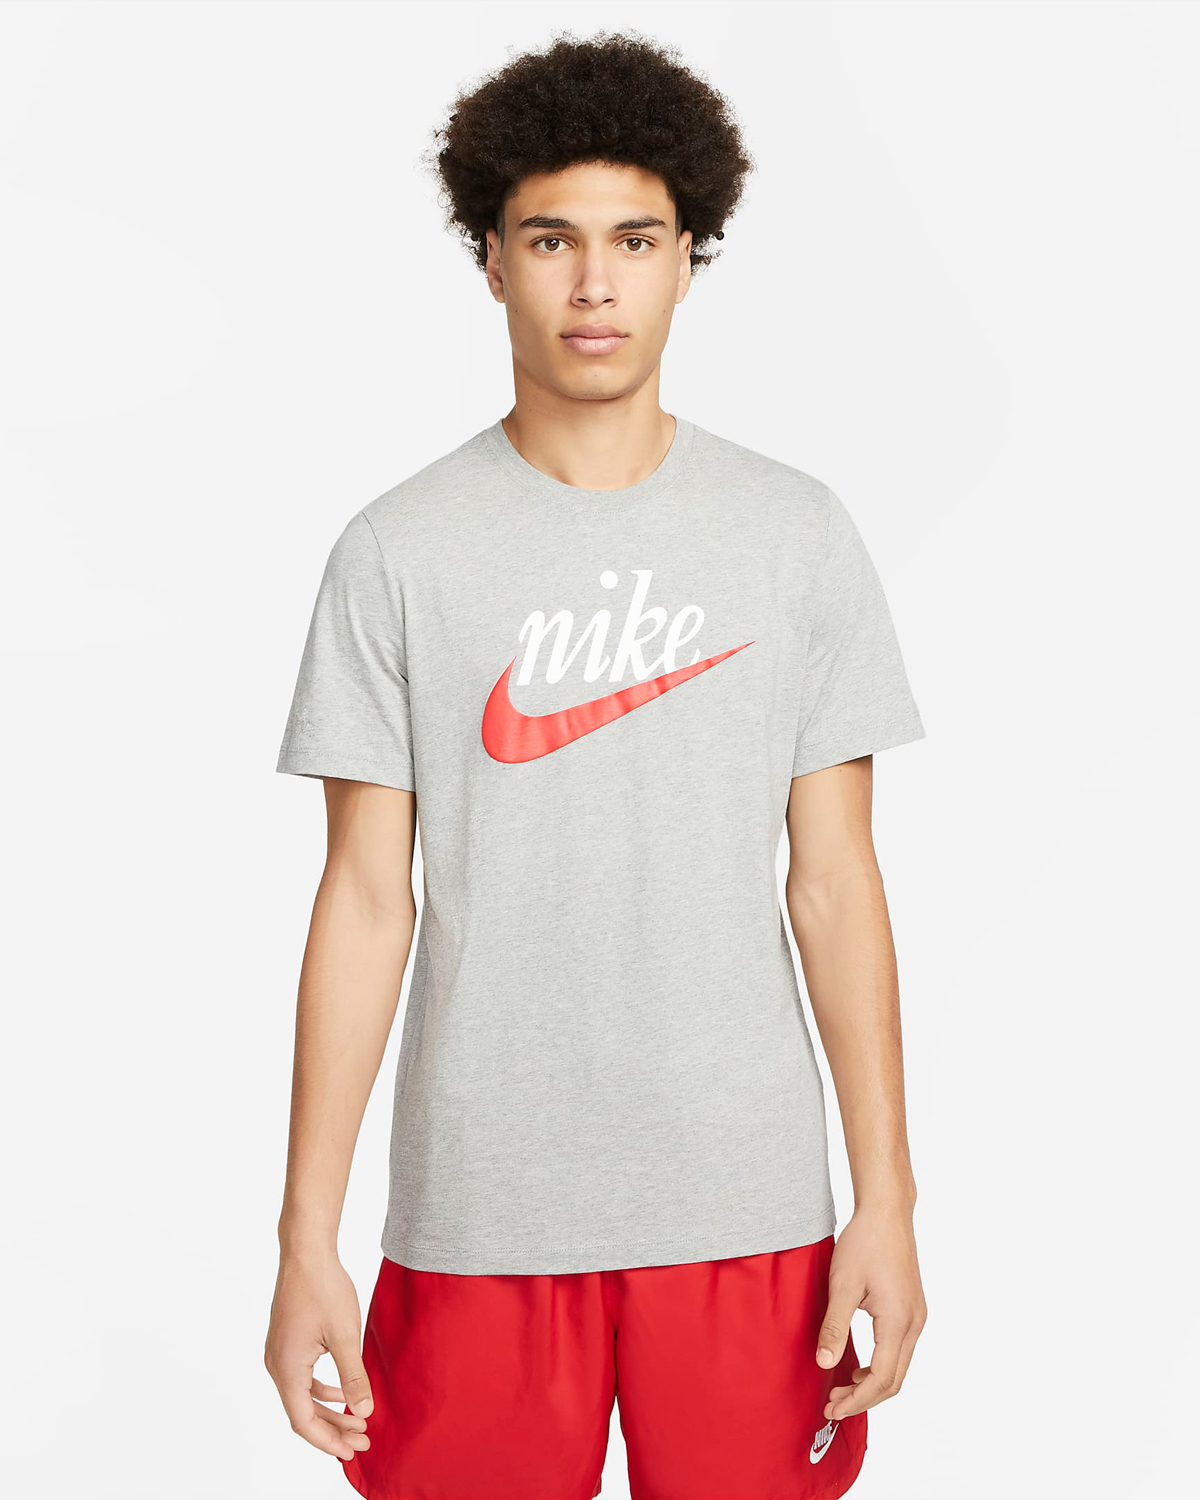 Nike-Air-Max-1-86-Big-Window-Shirt